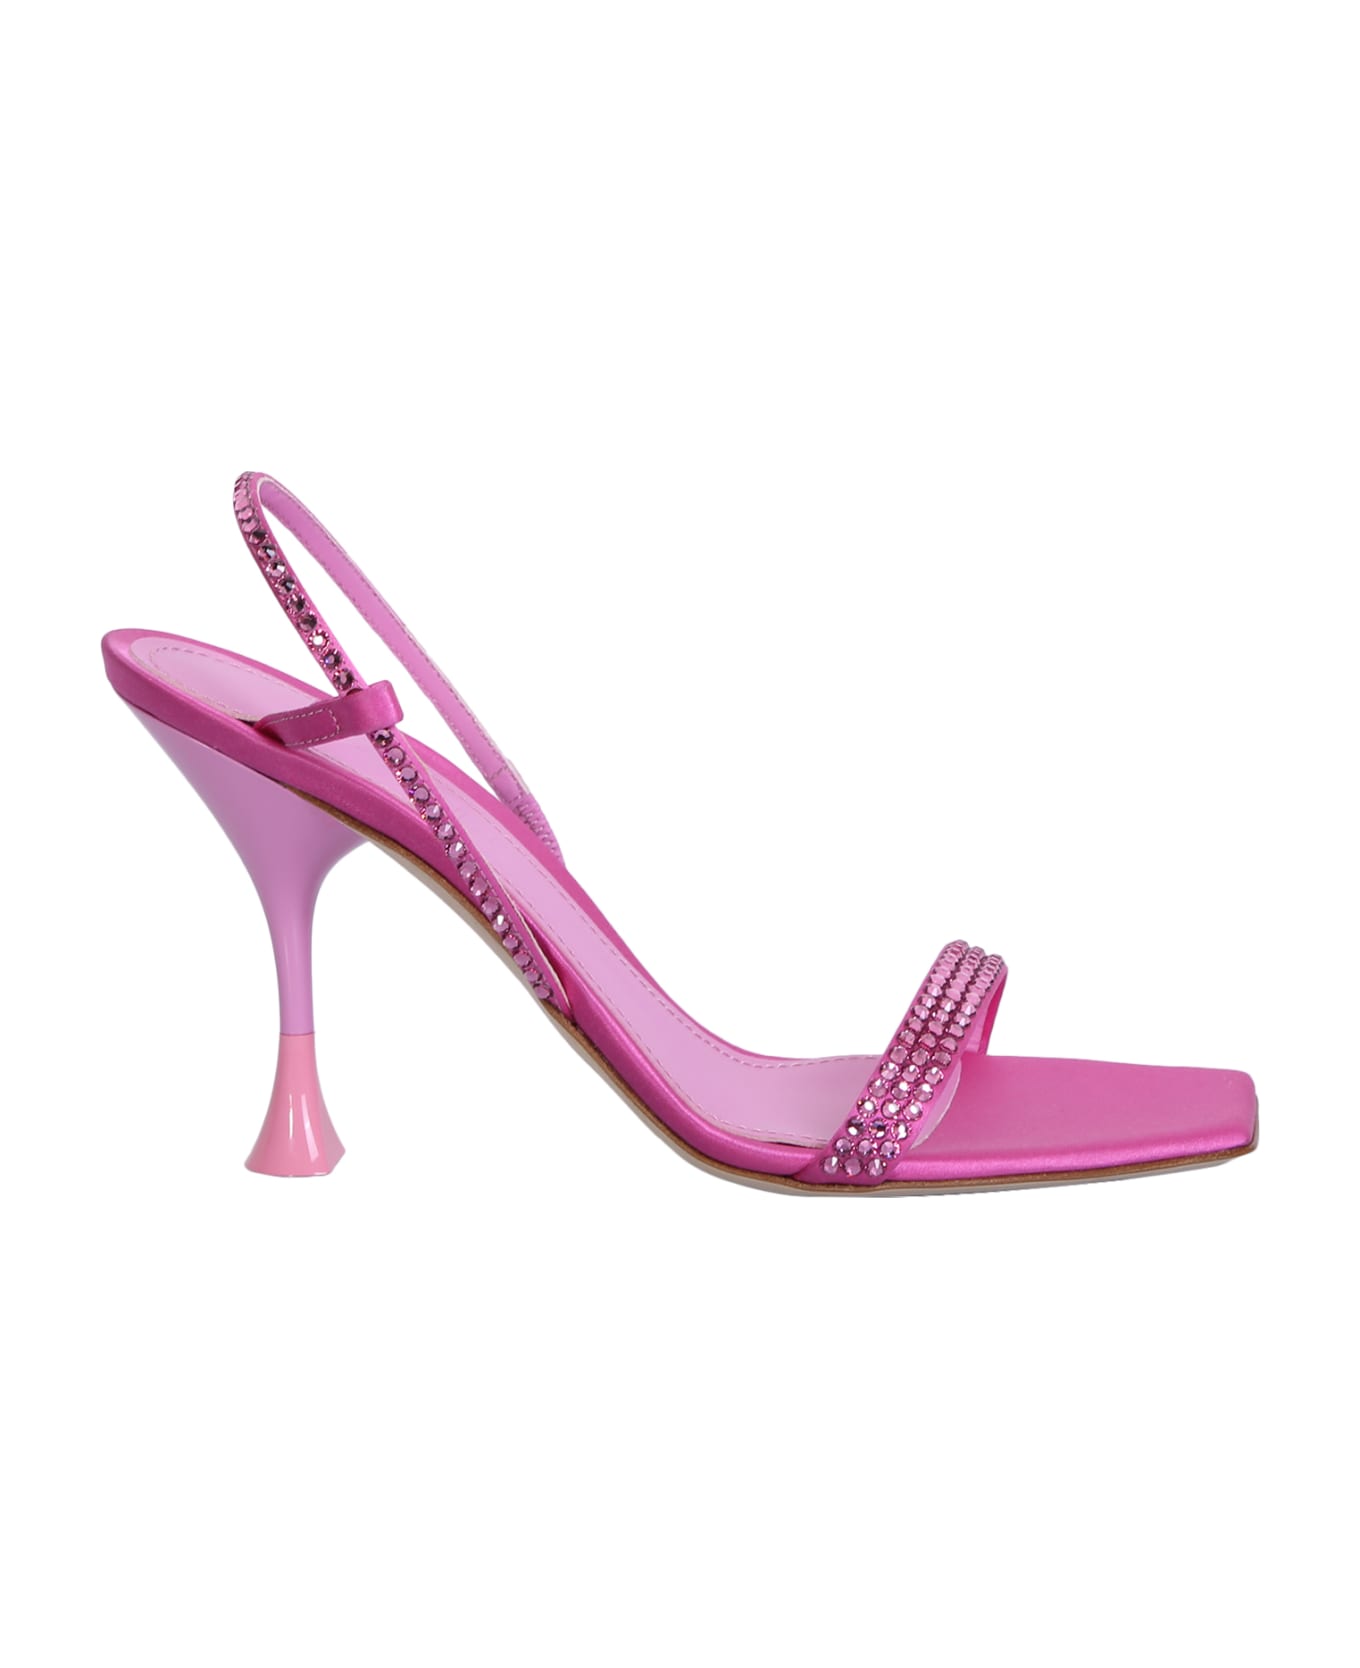 3JUIN Fuxia Eloise Sandals - Pink サンダル